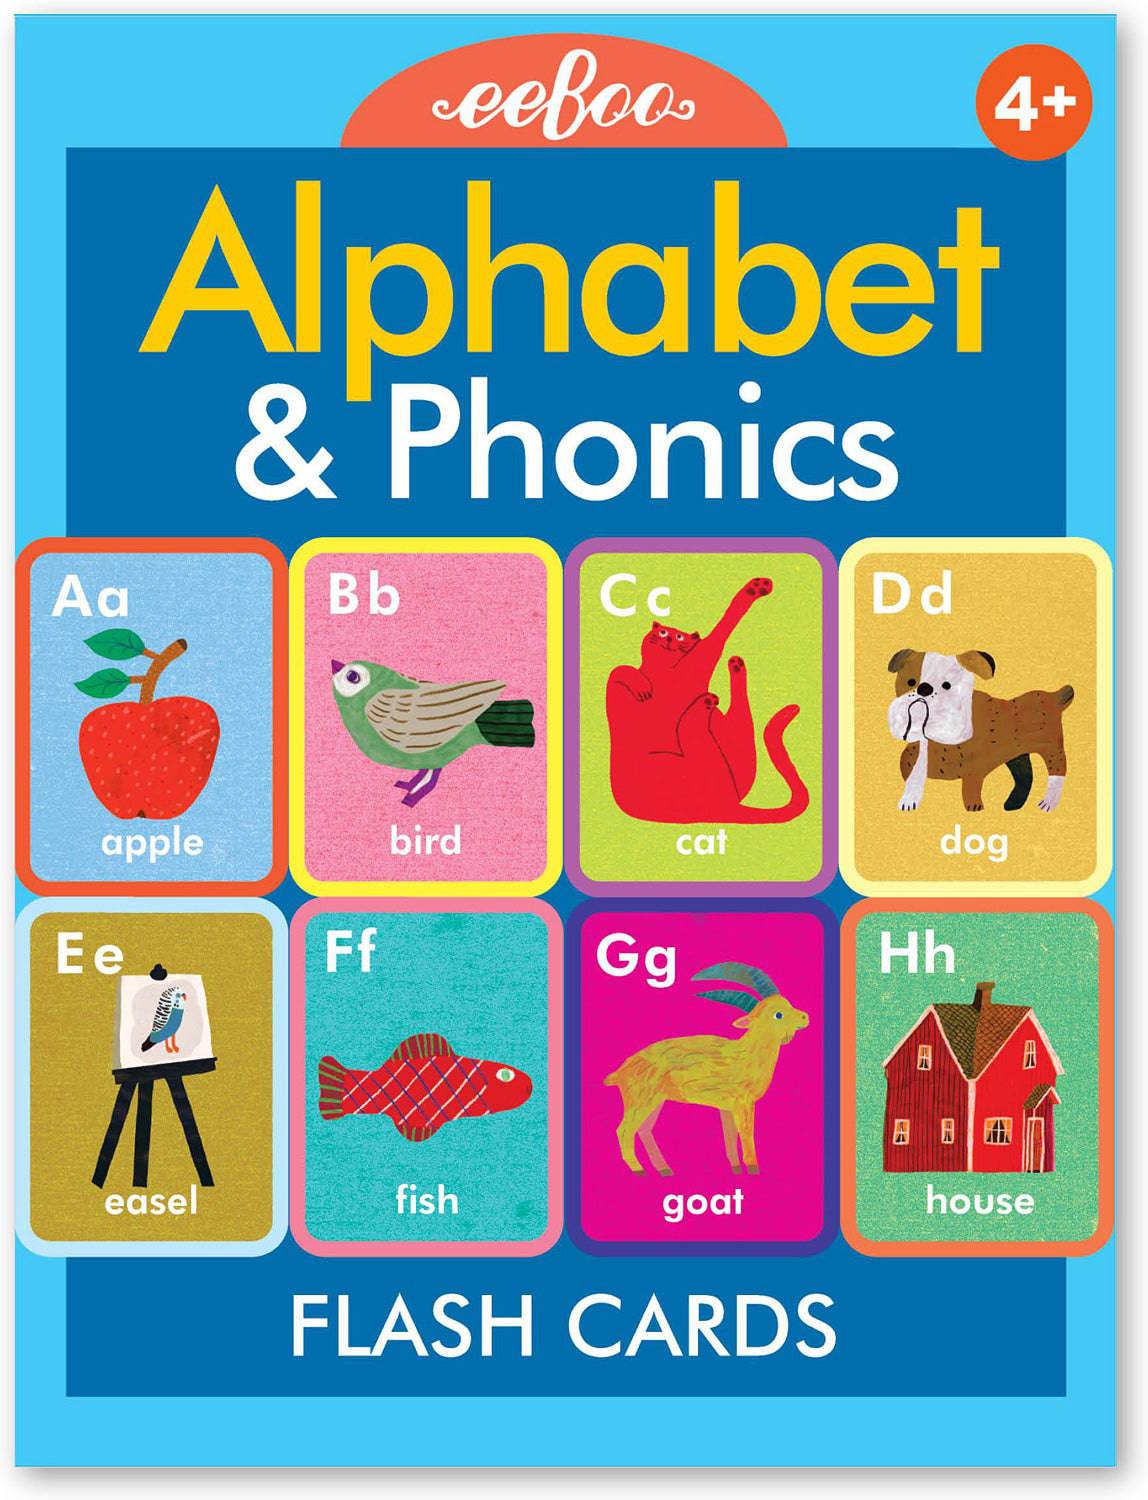 ASLANG ALPHABET FLASH CARDS - A Child's Delight